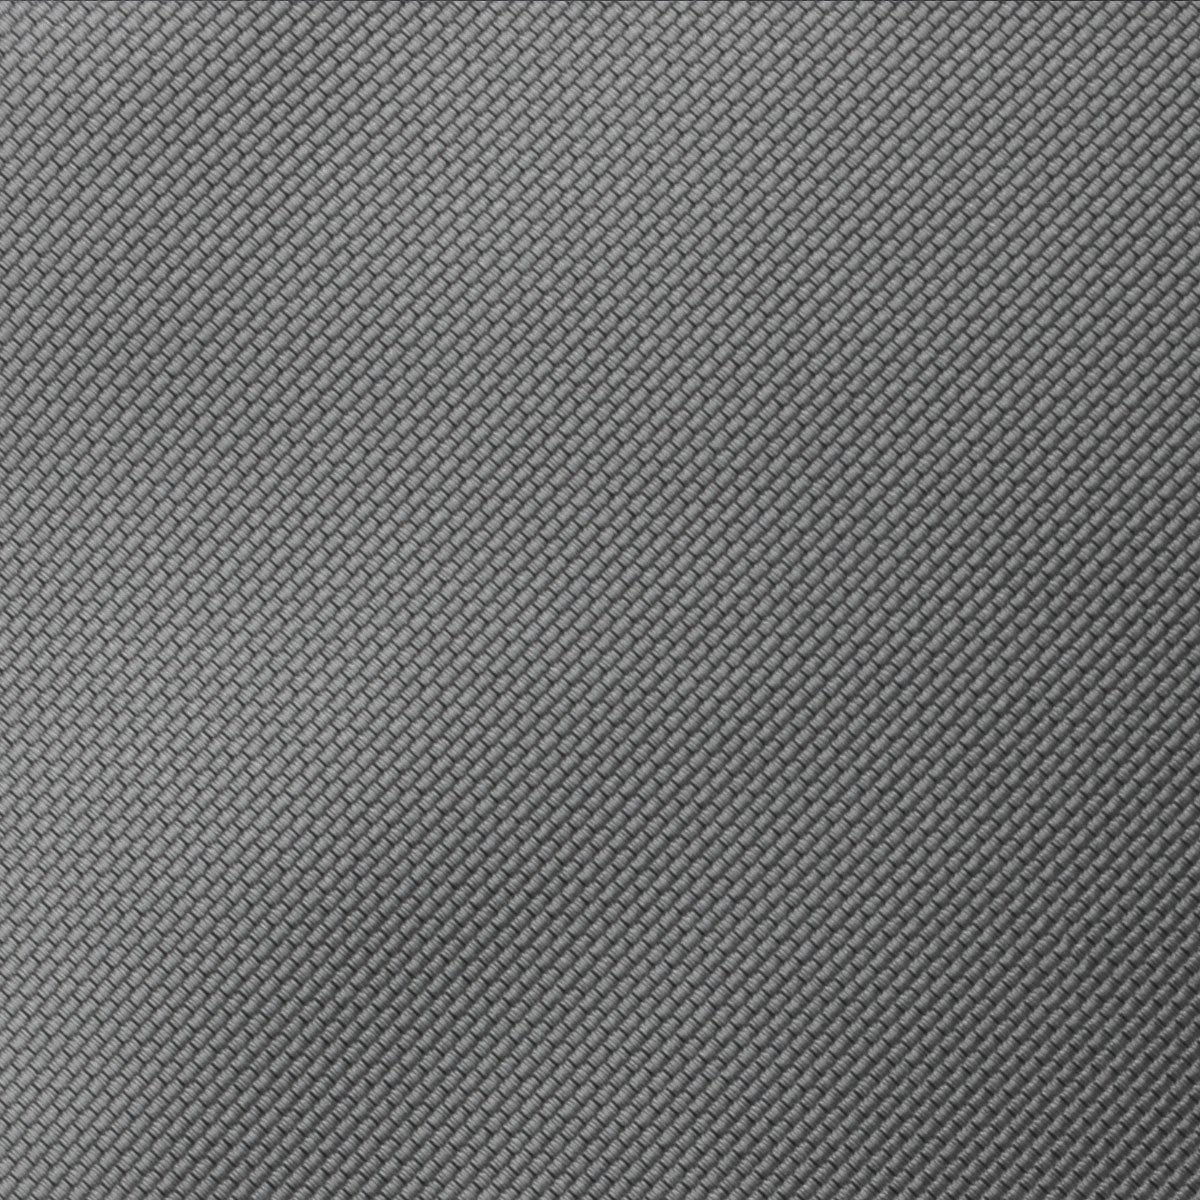 Mercury Grey Weave Skinny Tie Fabric